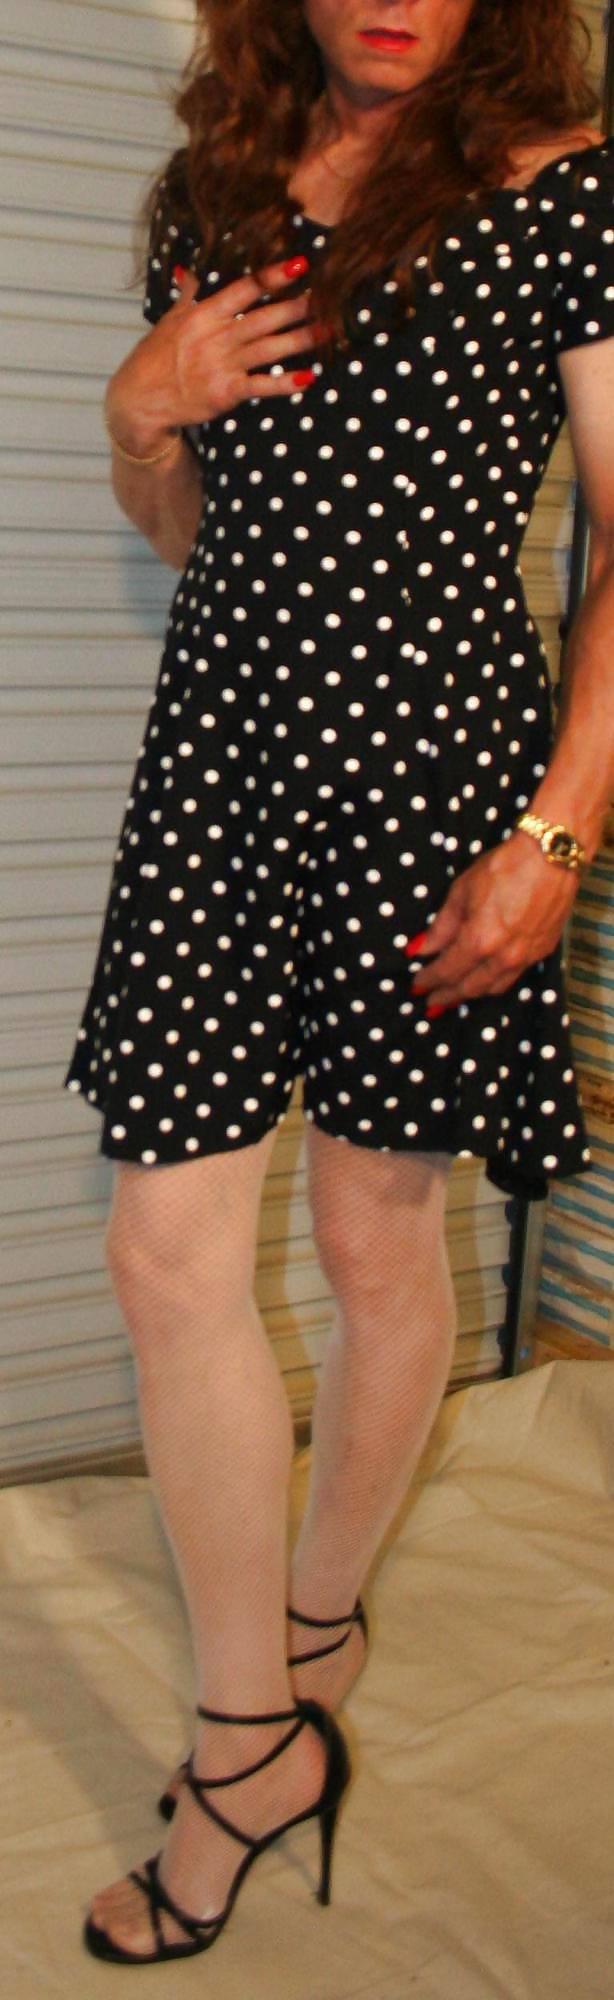 Brianna in a black and white polka dot dress. #21052618